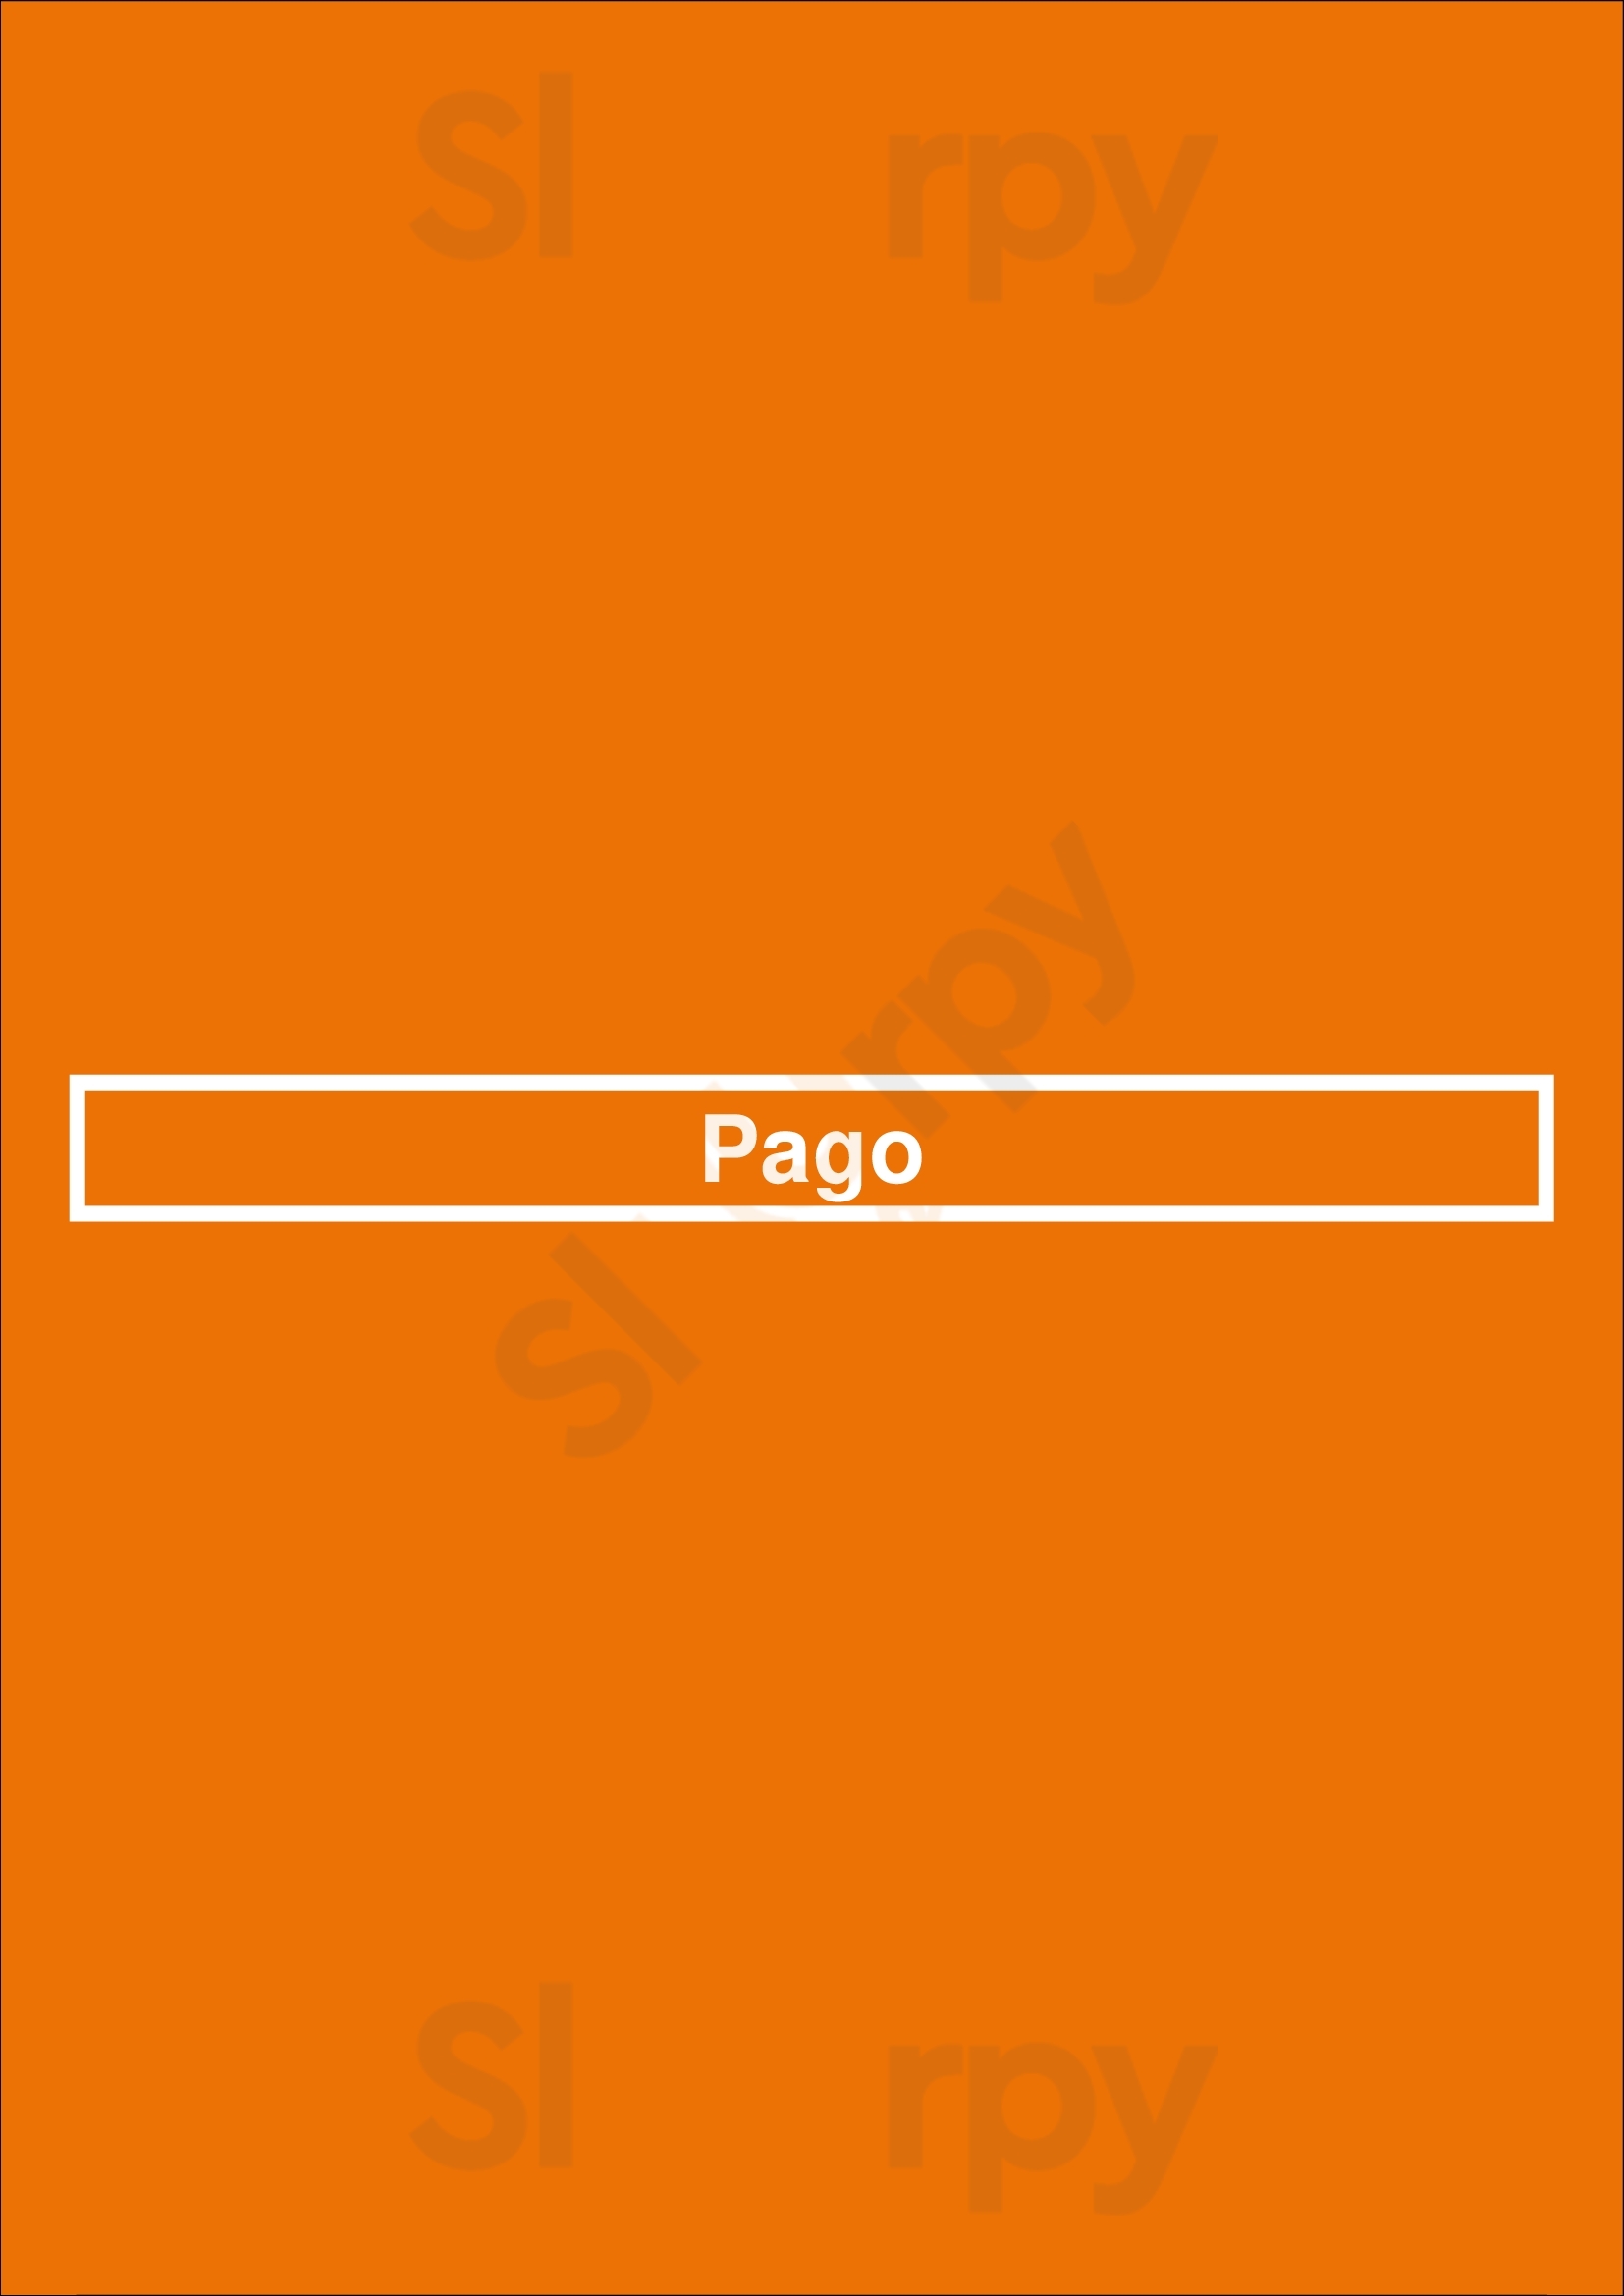 Pago Salt Lake City Menu - 1